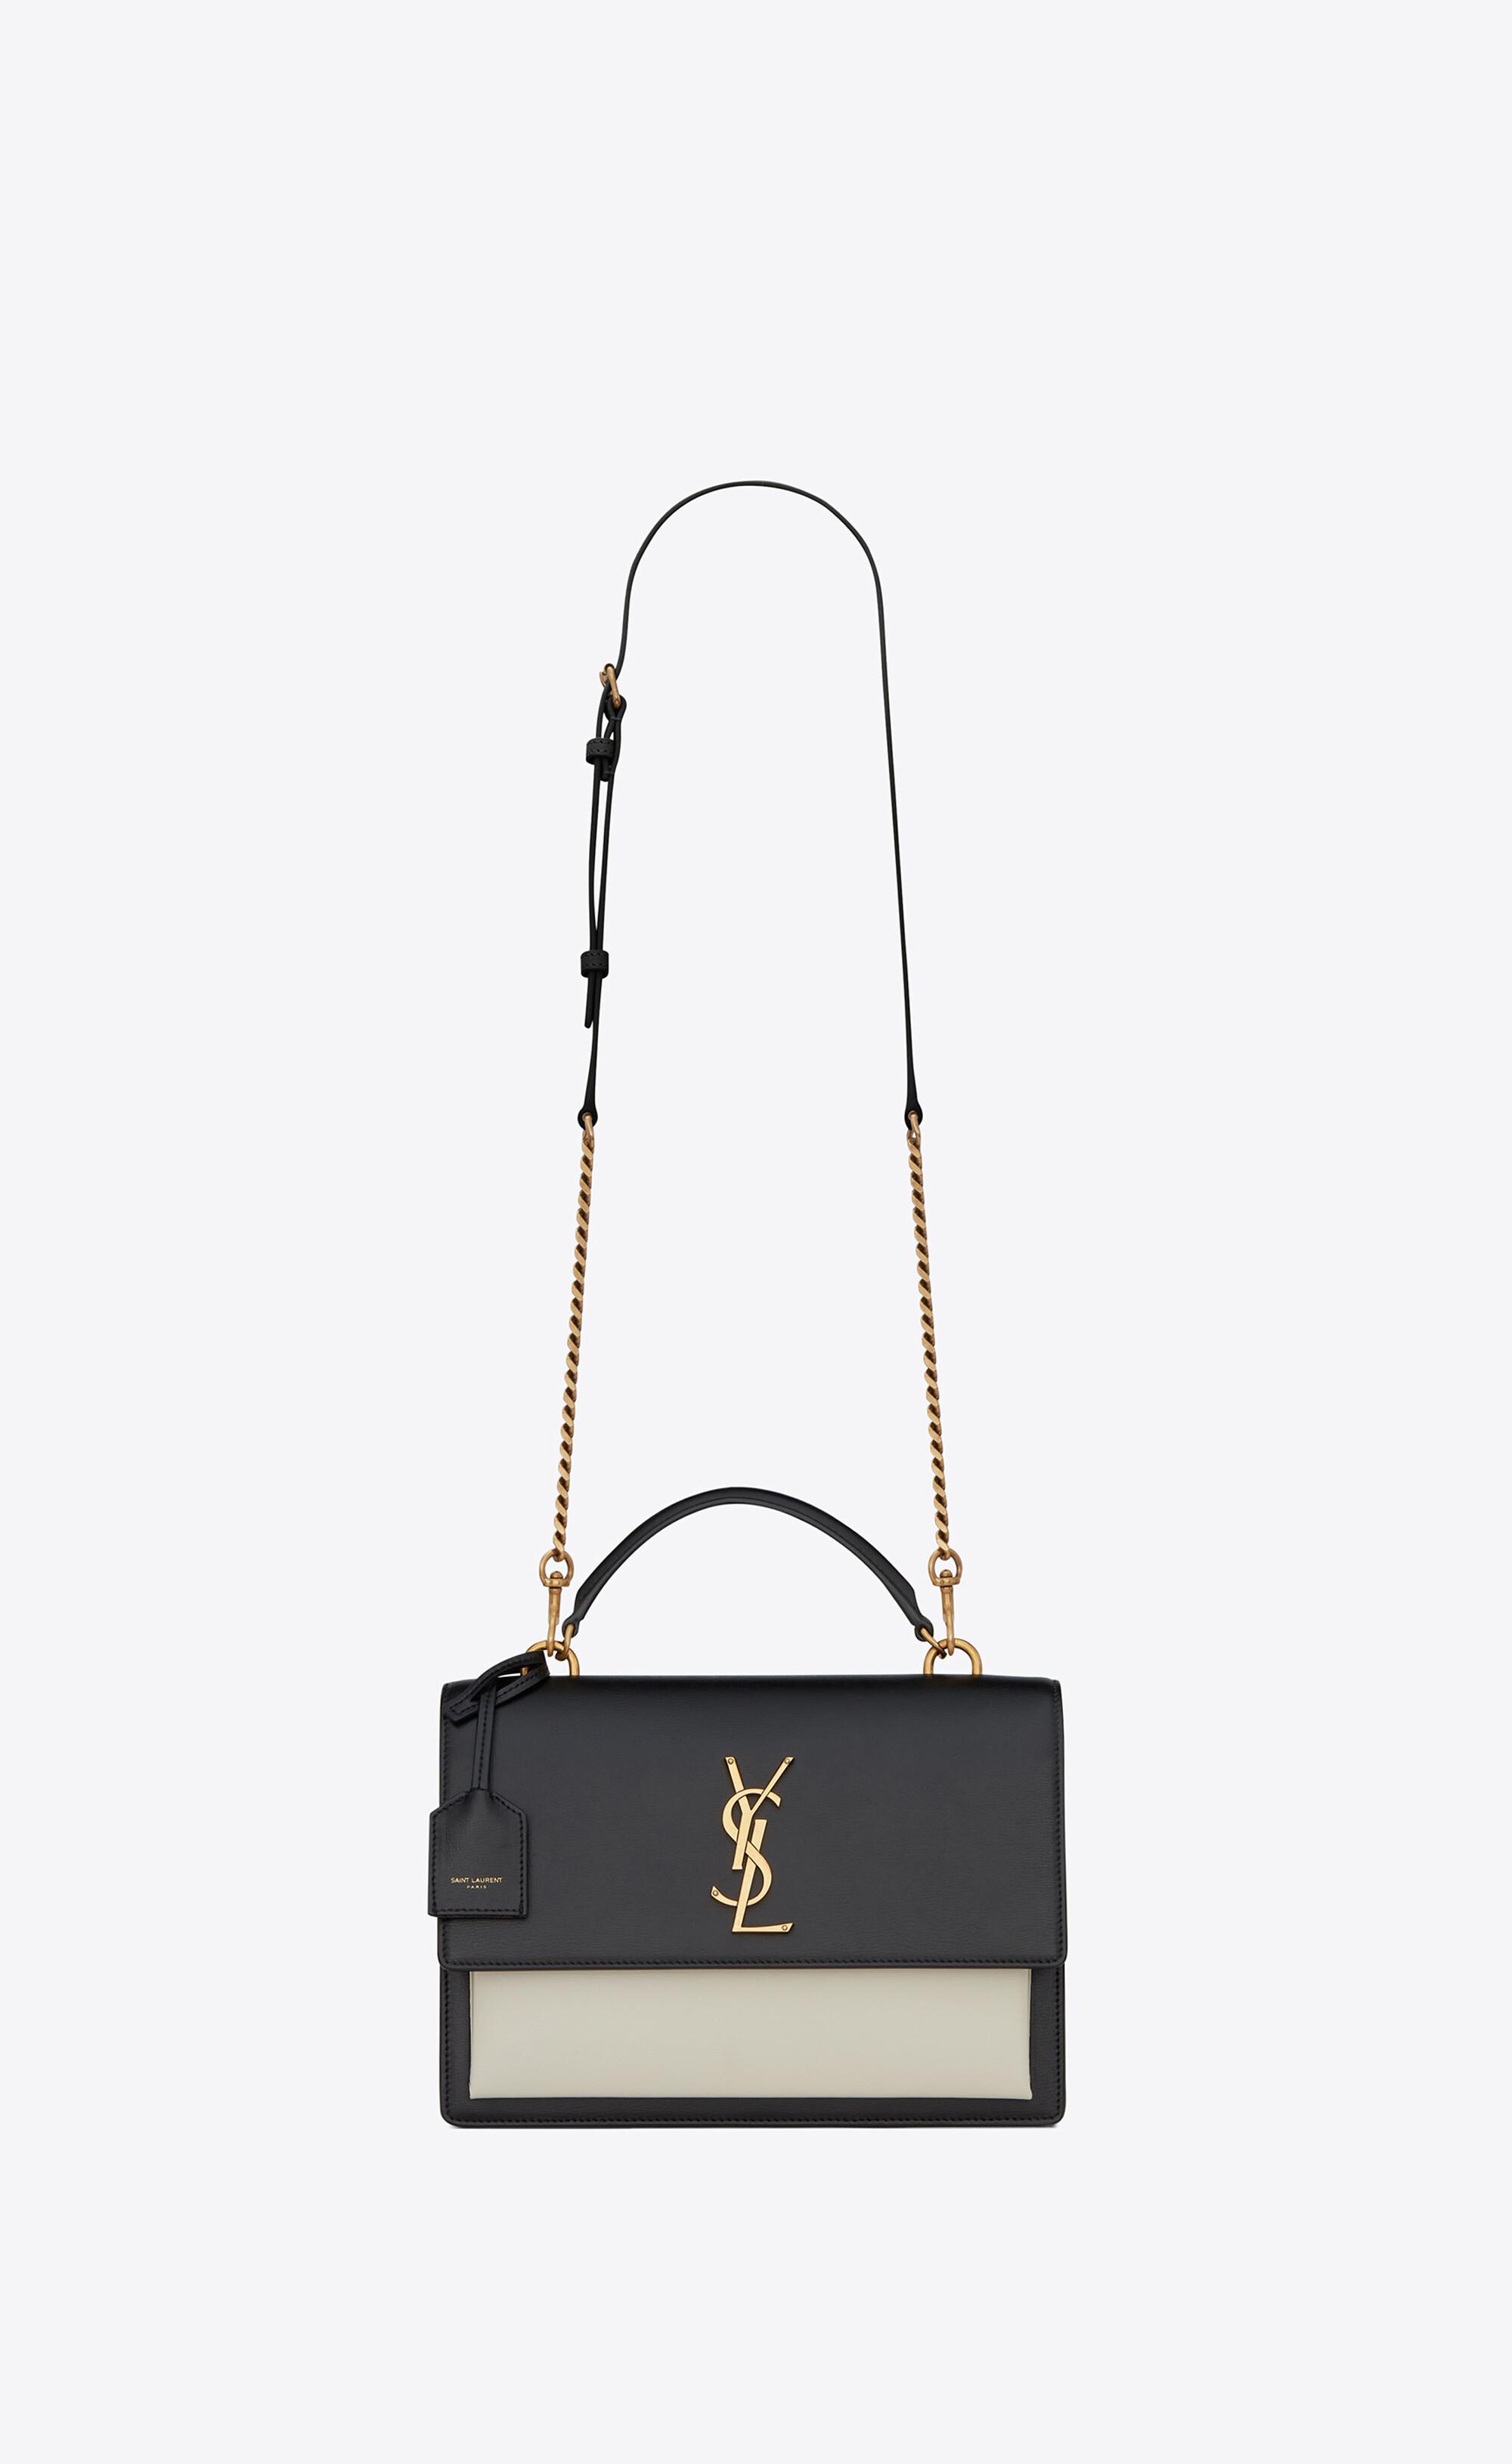 Saint Laurent top handle sunset bag mini and medium #fashion #love